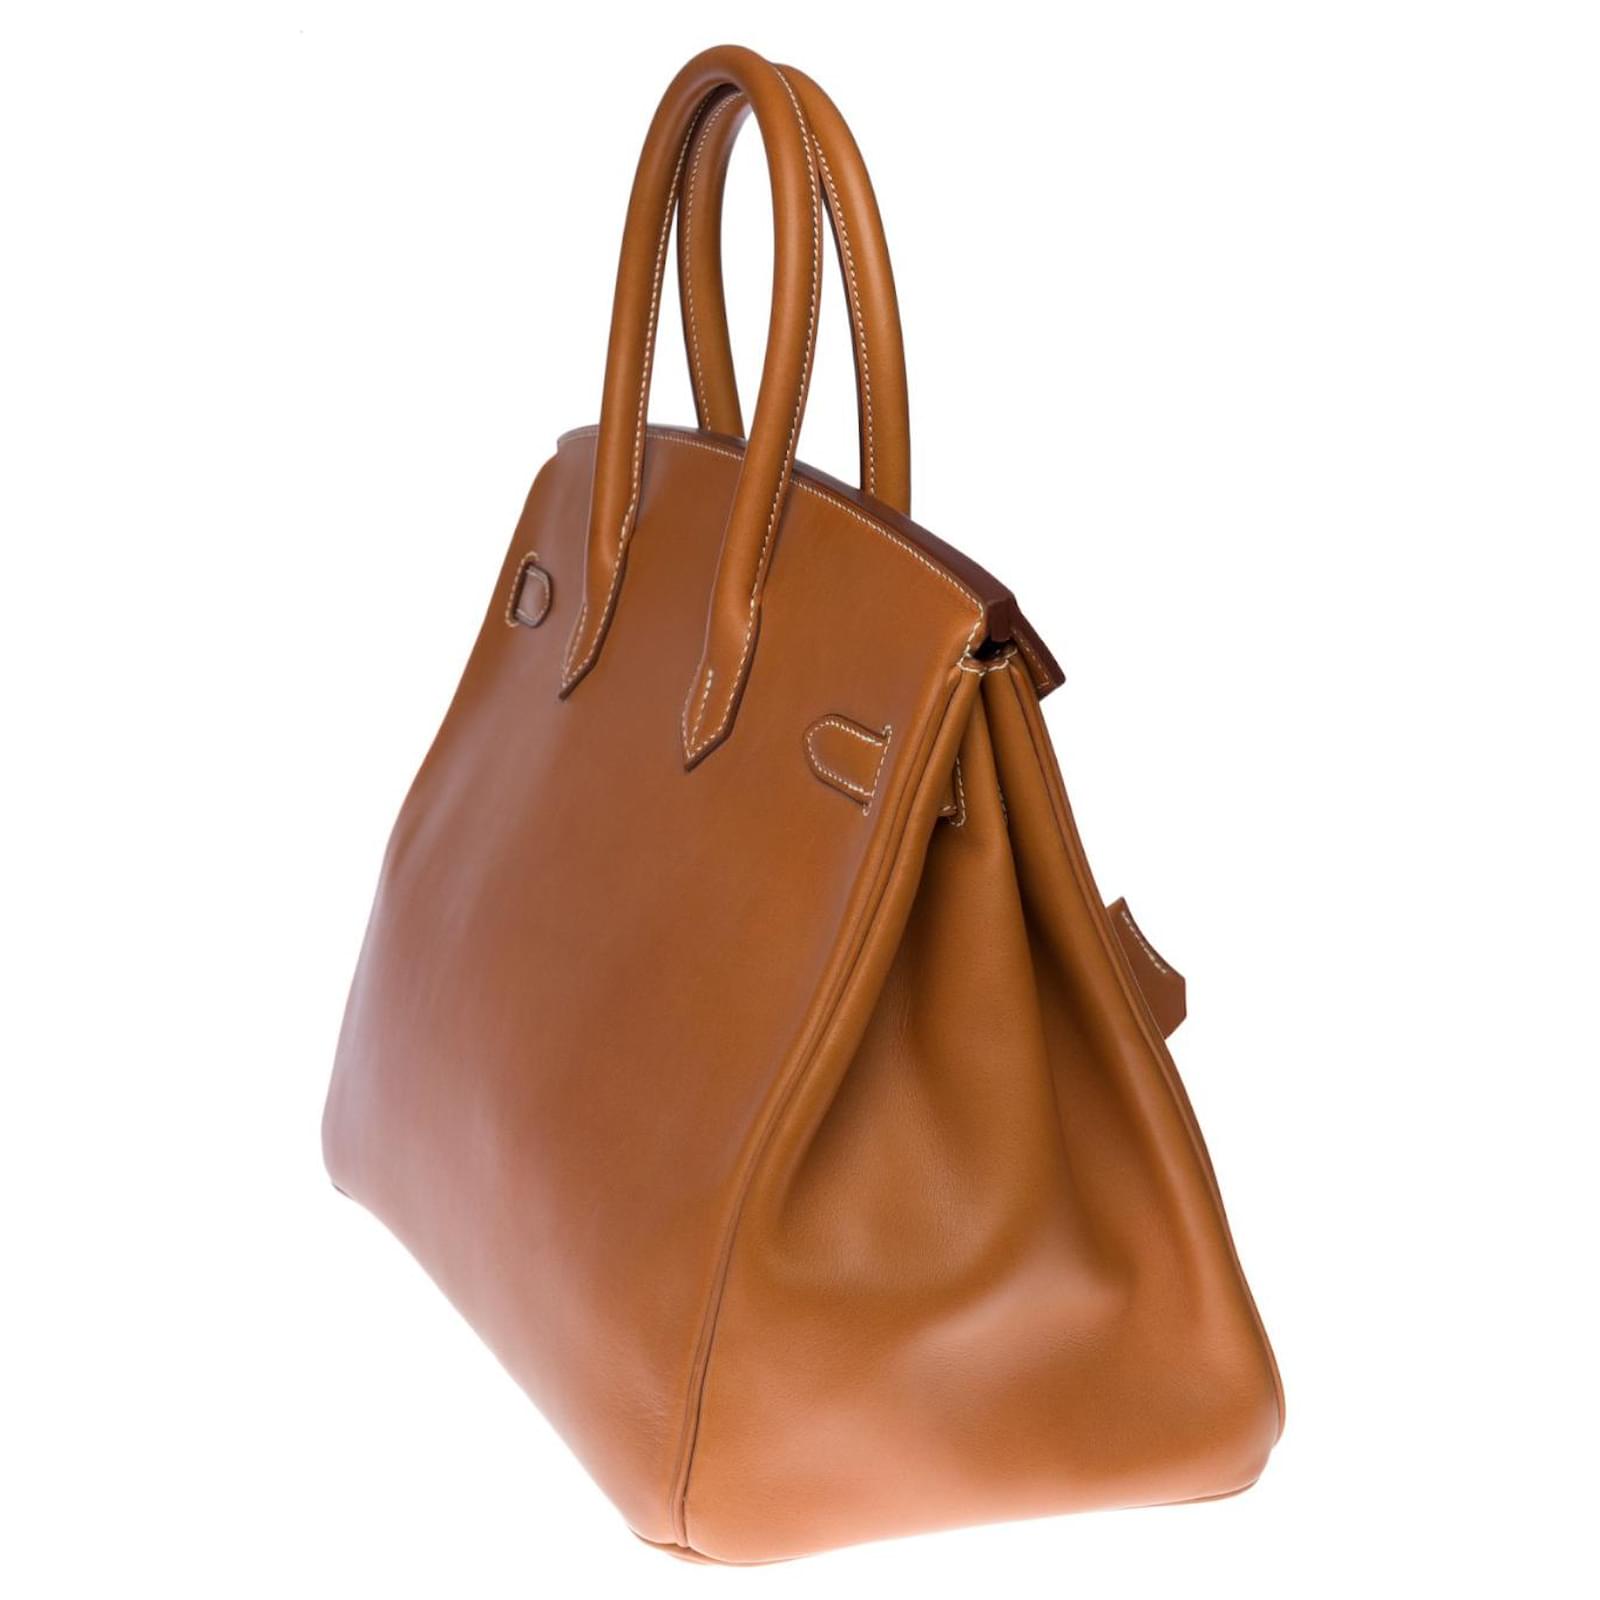 Hermès Birkin 35 cm Handbag in Gold Barenia Leather